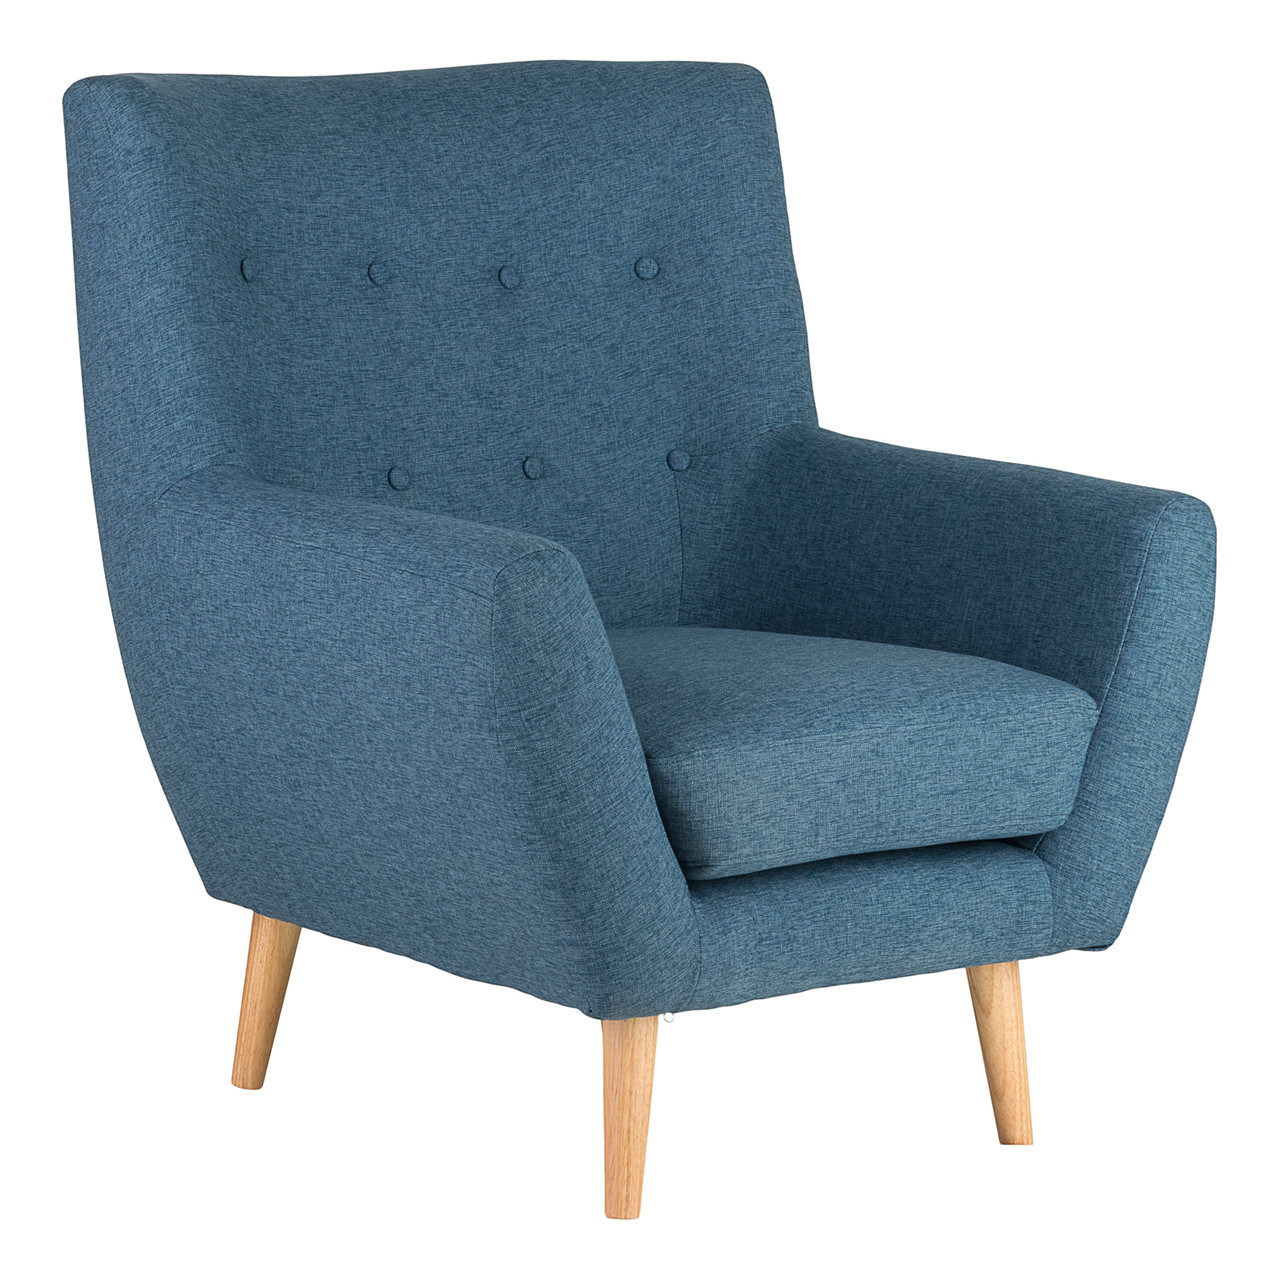 MIAMI XL loungestol blå // Forventes på lager til til vinter